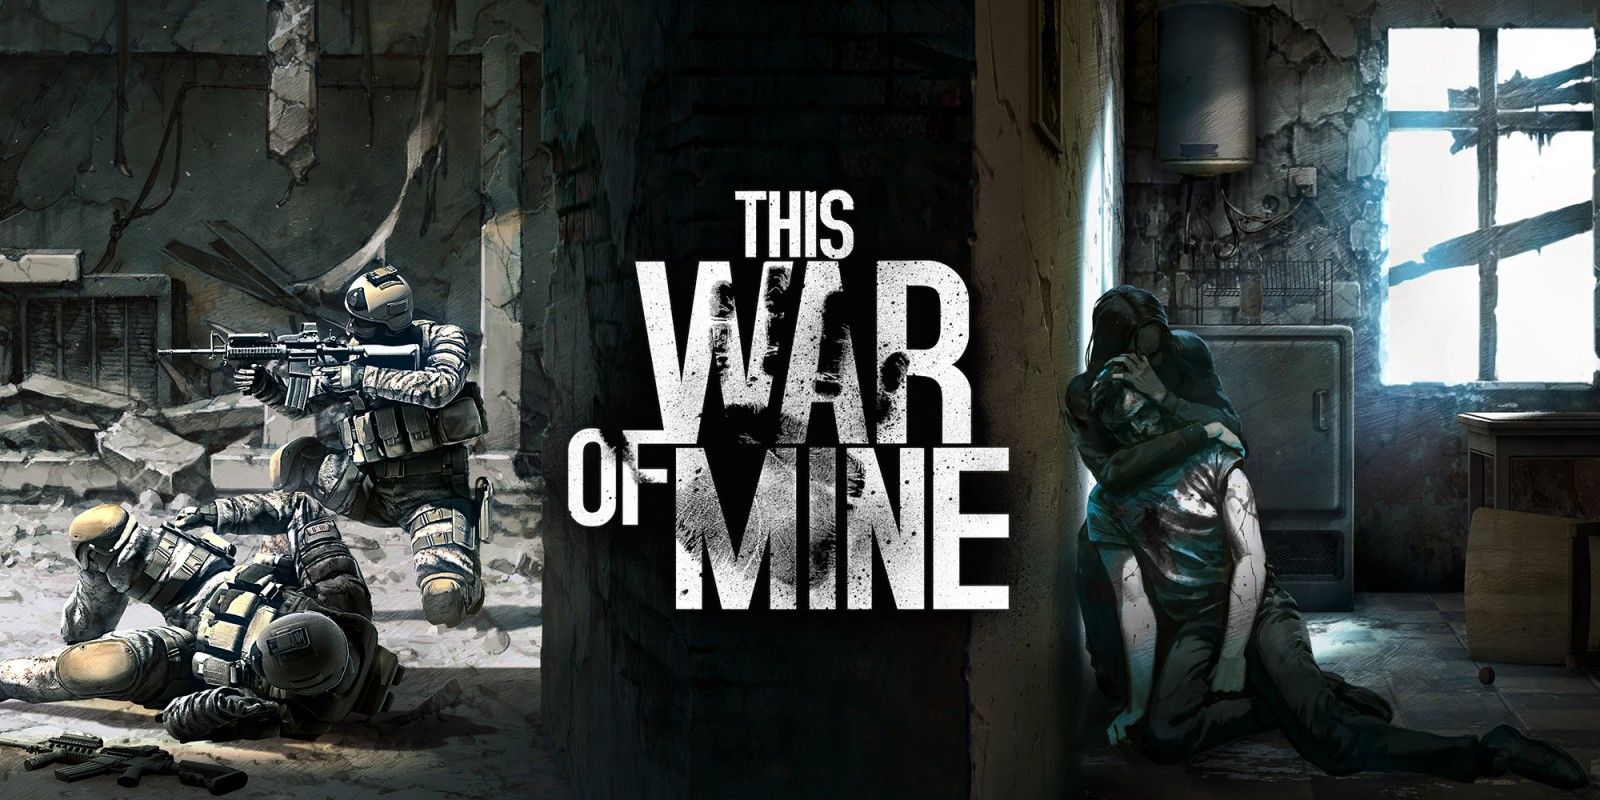 Juego contra la guerra This War of Mine para donar ventas a Ucrania: Cruz Roja